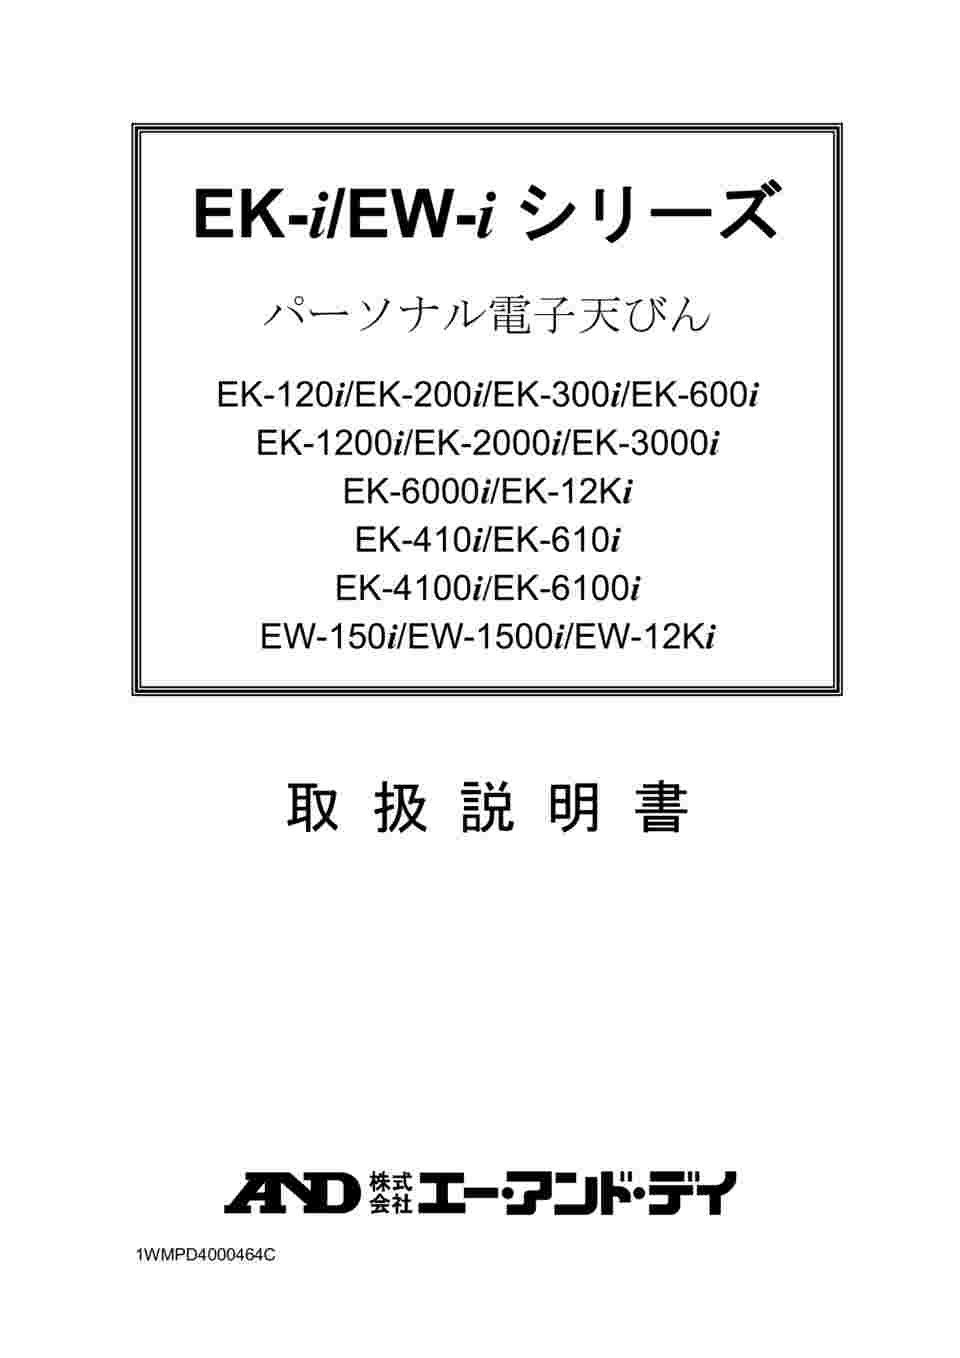 A&D パーソナル天びん EK-12Ki ひょう量:12000g 最小表示:1g 皿寸法